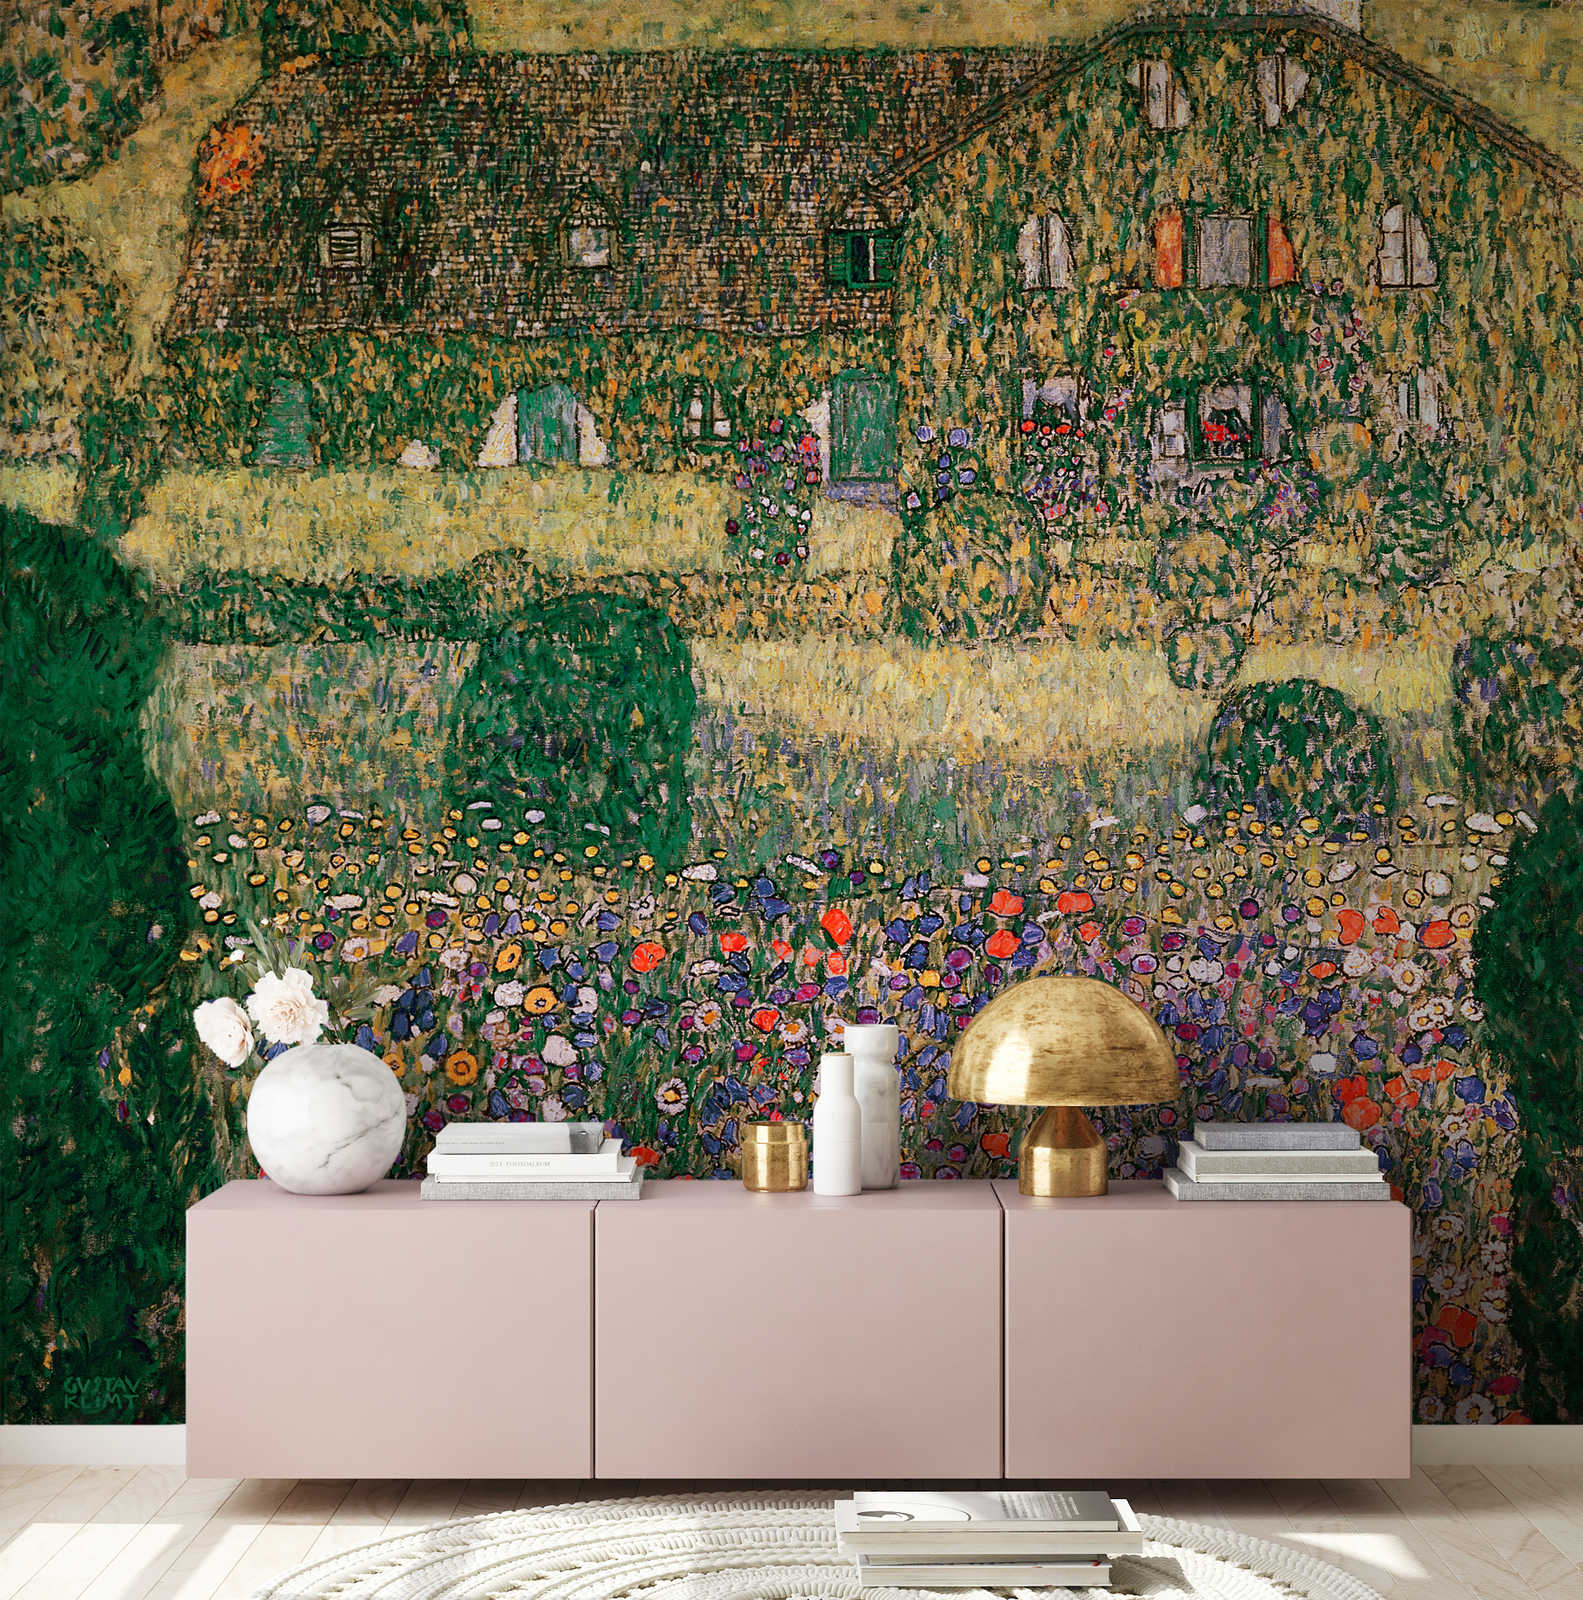             Papier peint panoramique "Landhaus am Attersee" de Gustav Klimt
        